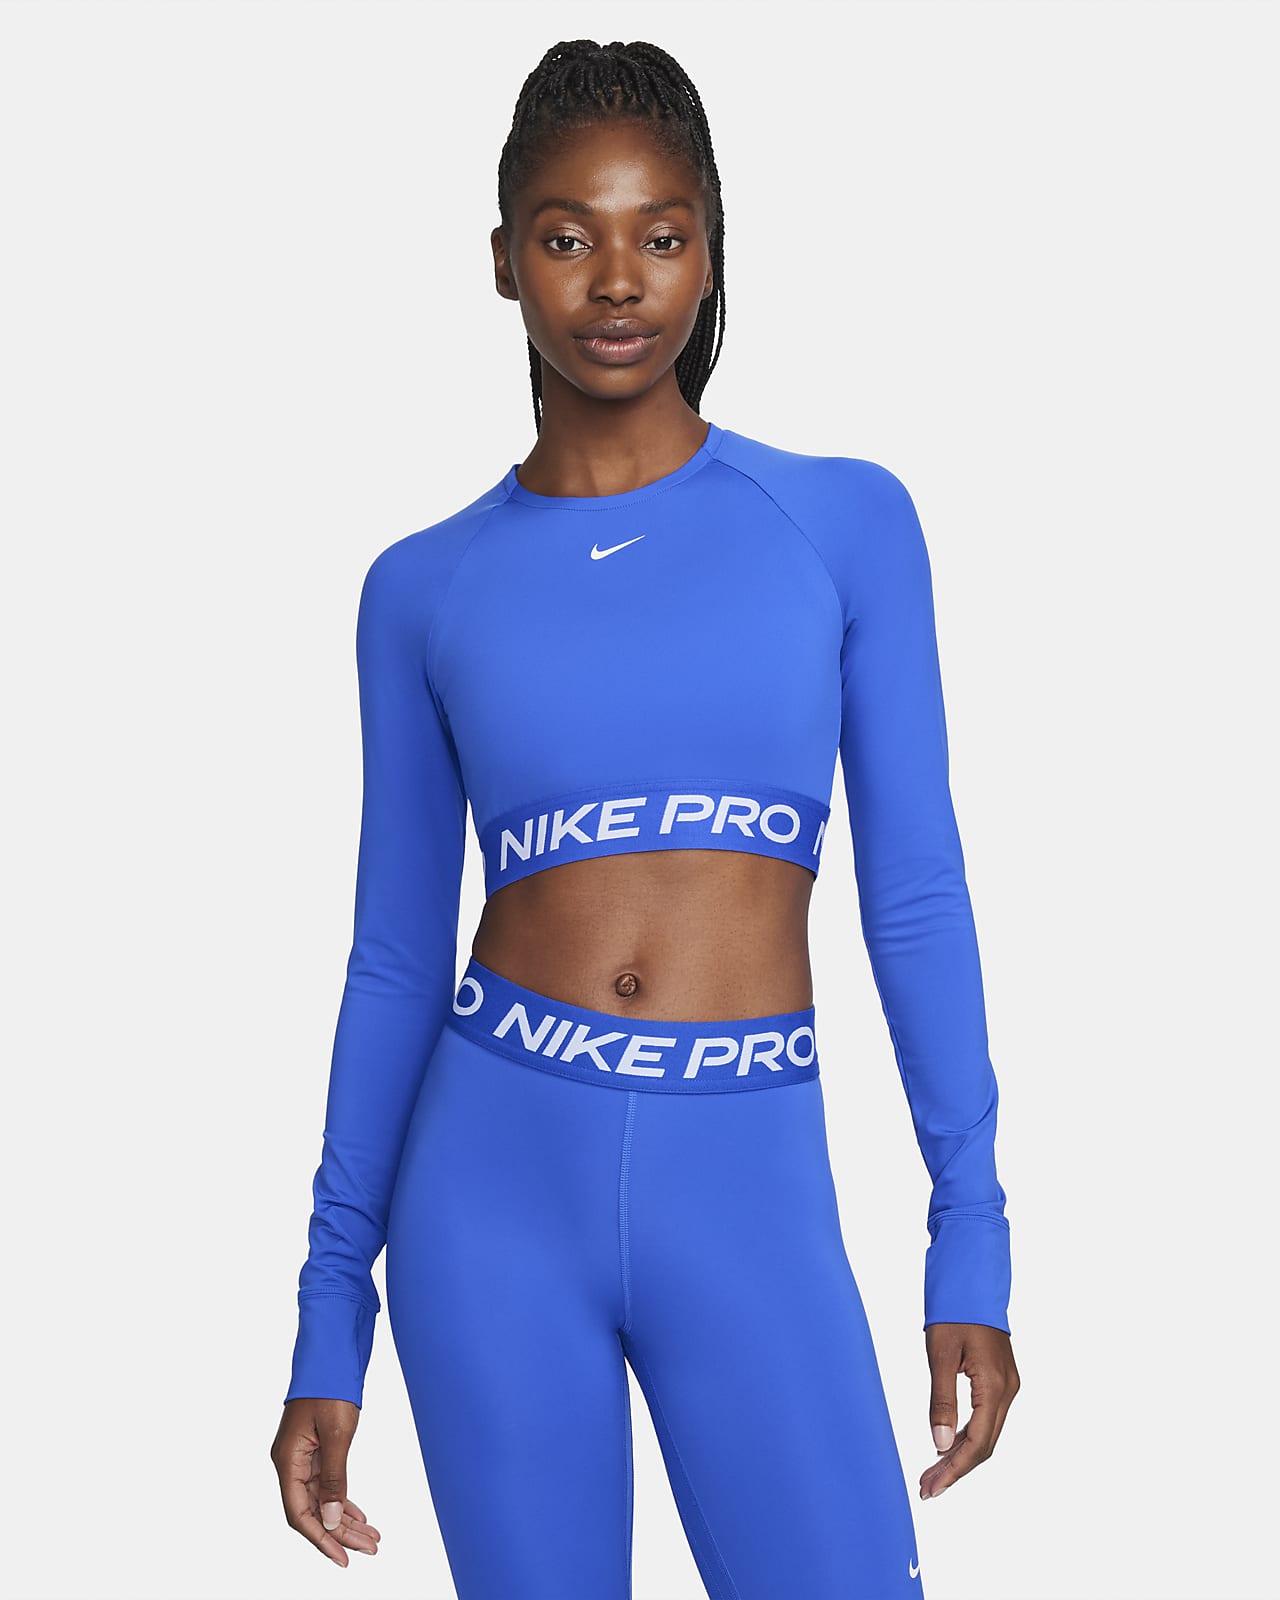 Nike Pro 365 Dri-FIT verkürztes Longsleeve-Oberteil für Damen